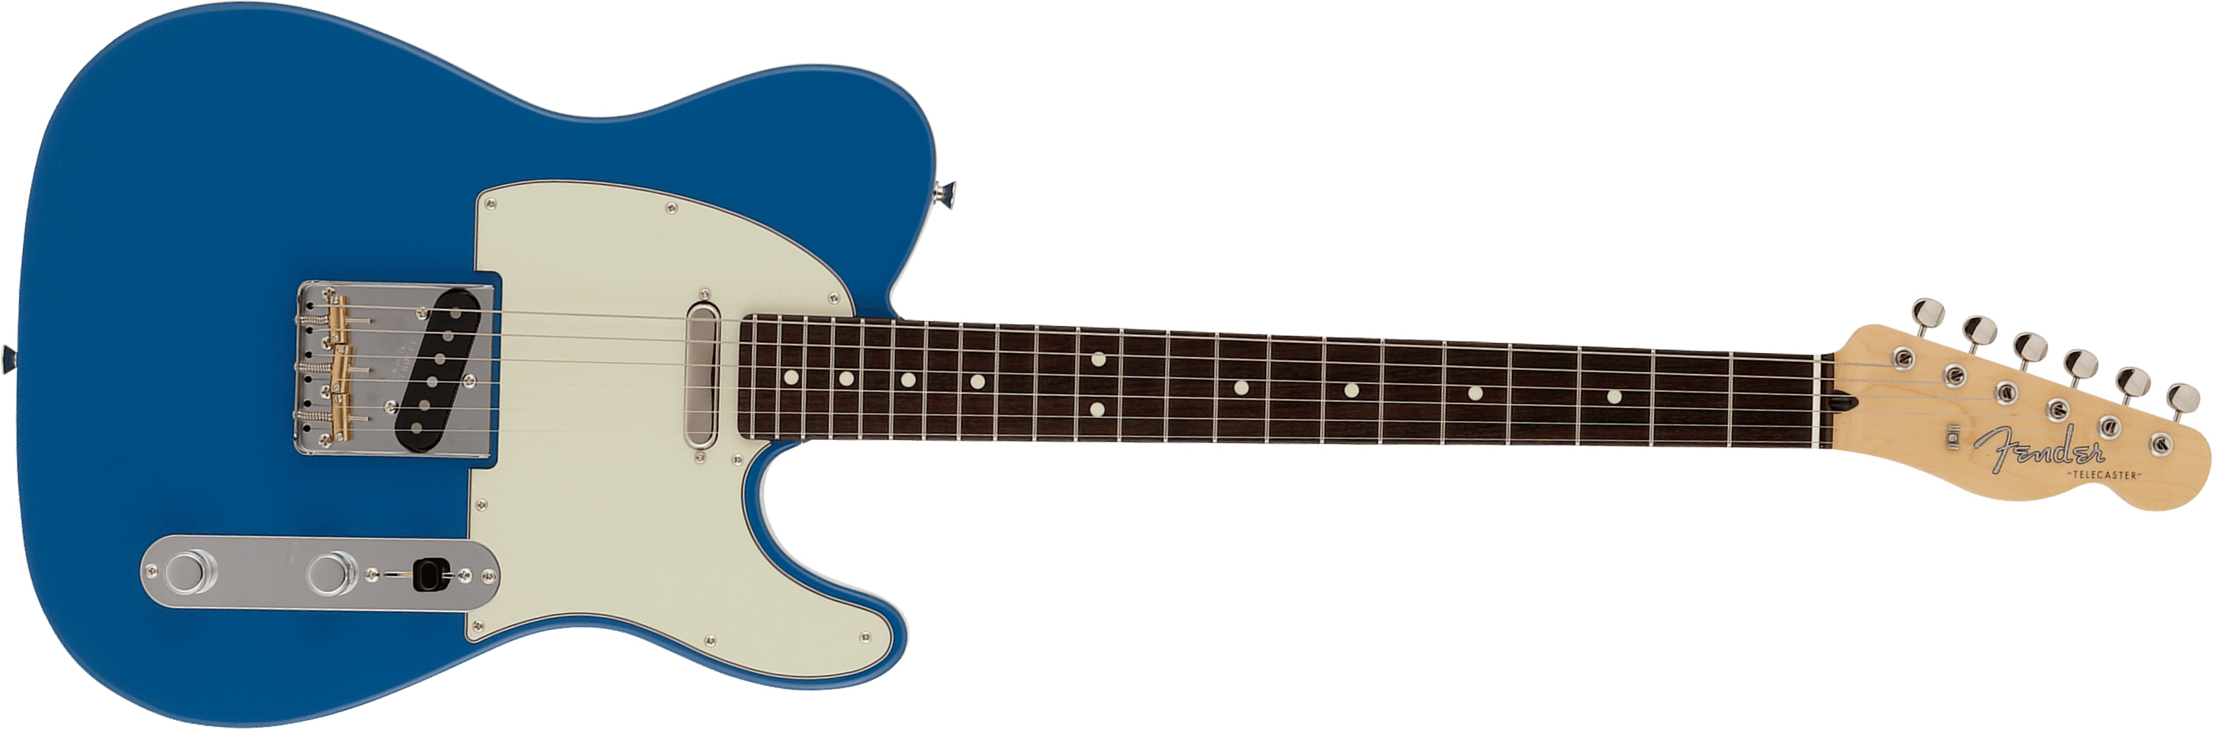 Fender Tele Hybrid Ii Jap 2s Ht Mn - Forest Blue - Televorm elektrische gitaar - Main picture